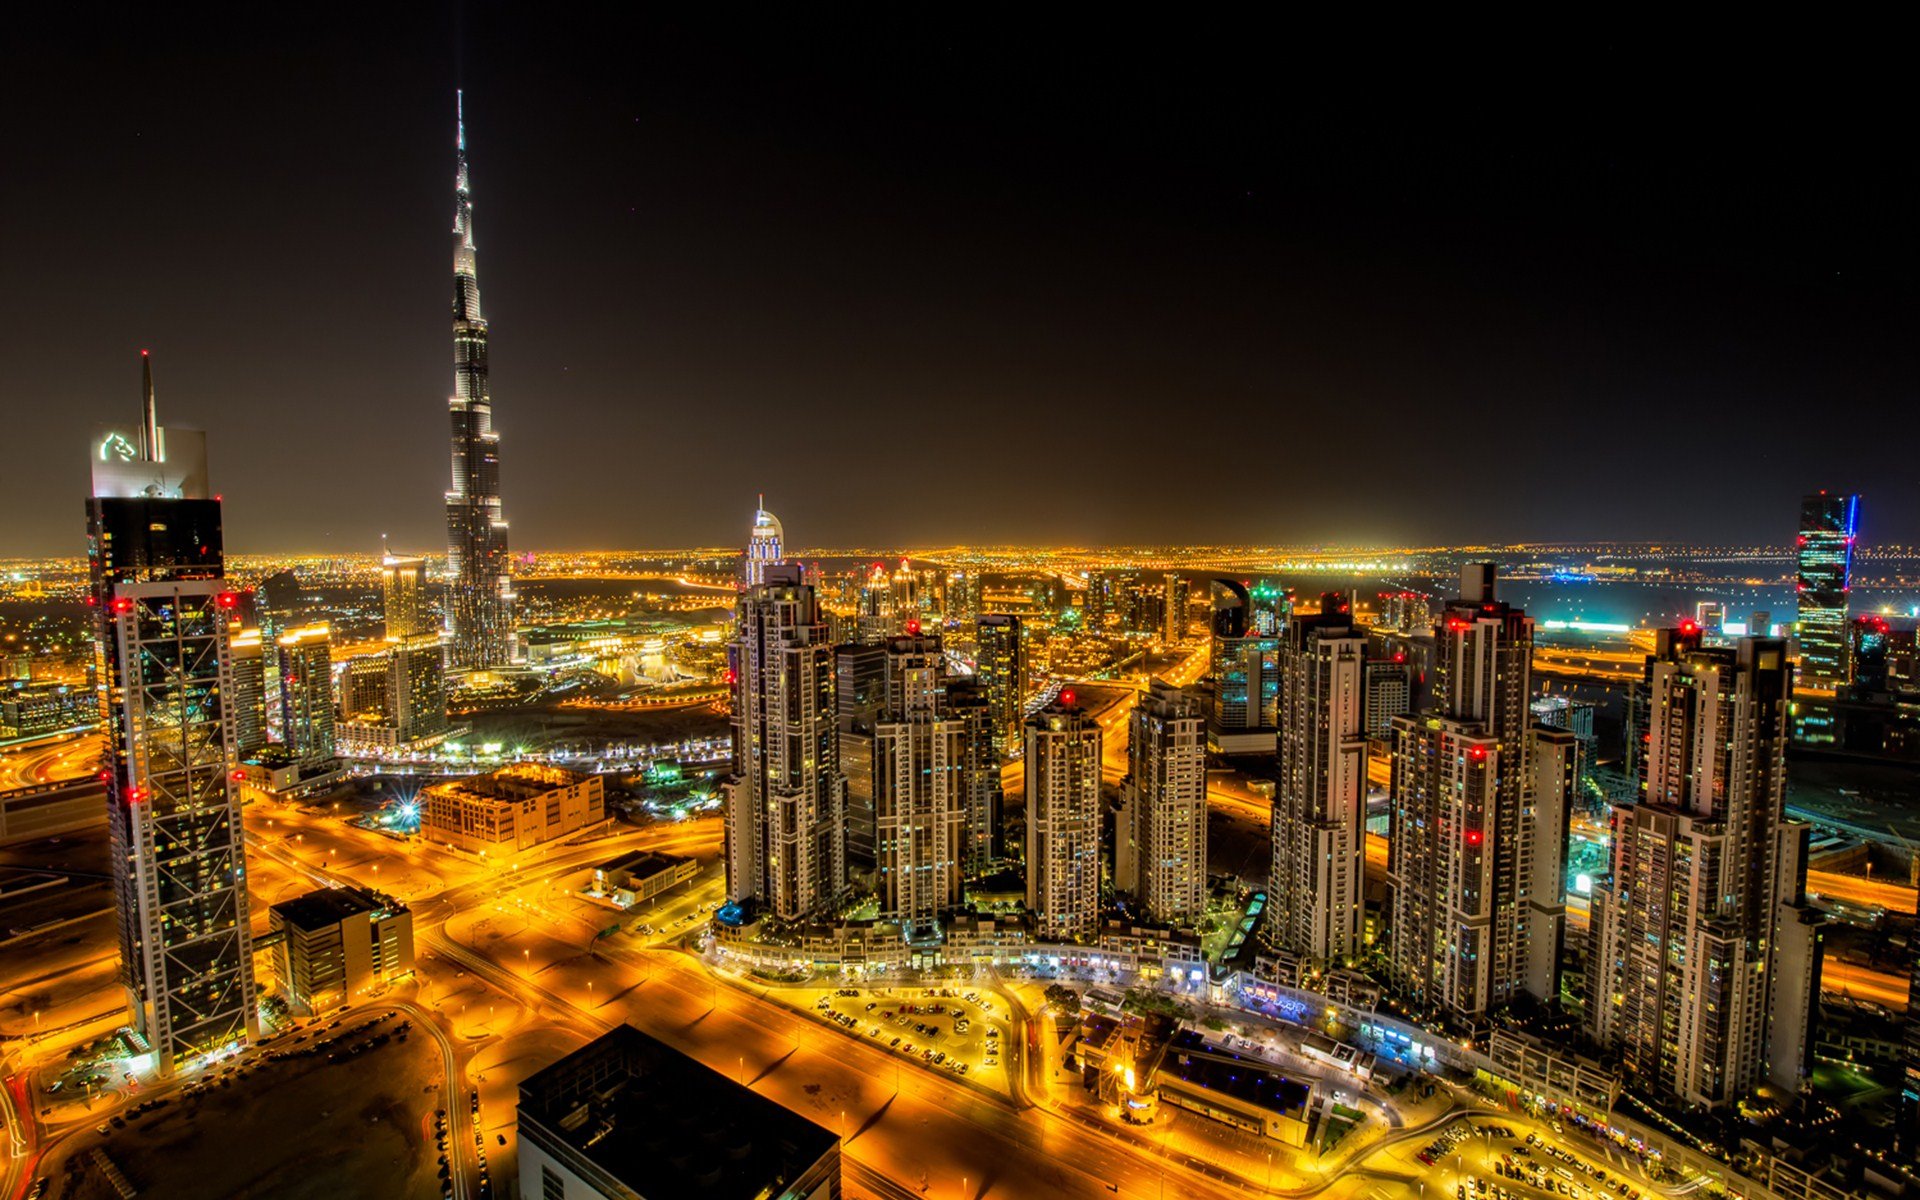 Dubai, Burj Khalifa, Night View Mobile Phone Wallpaper Stock Photo - Image  of blue, east: 104068524